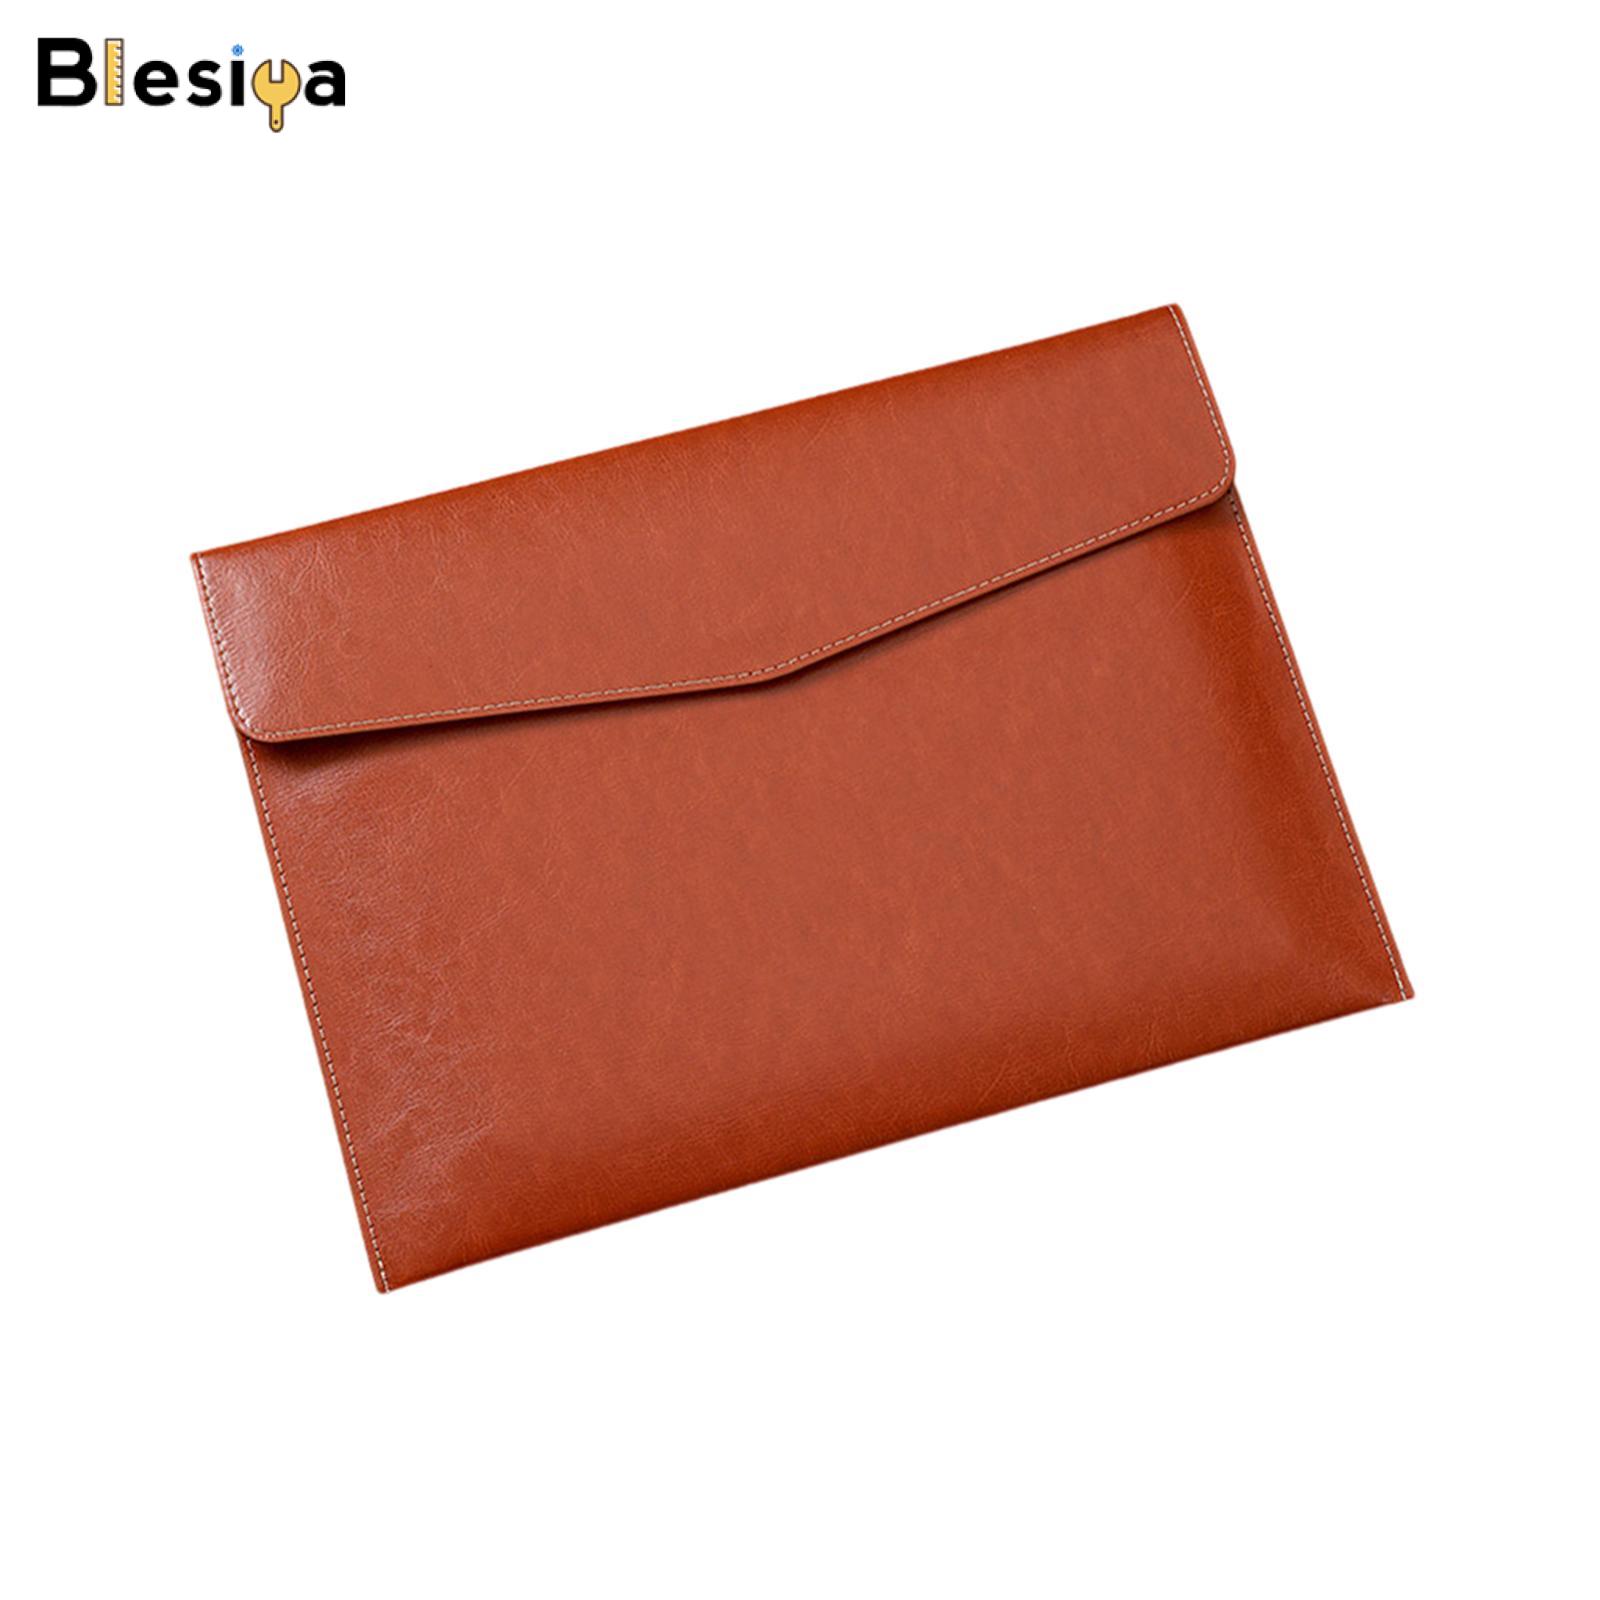 Blesiya PU Leather Folder Portable Expanding File Organizer for Home